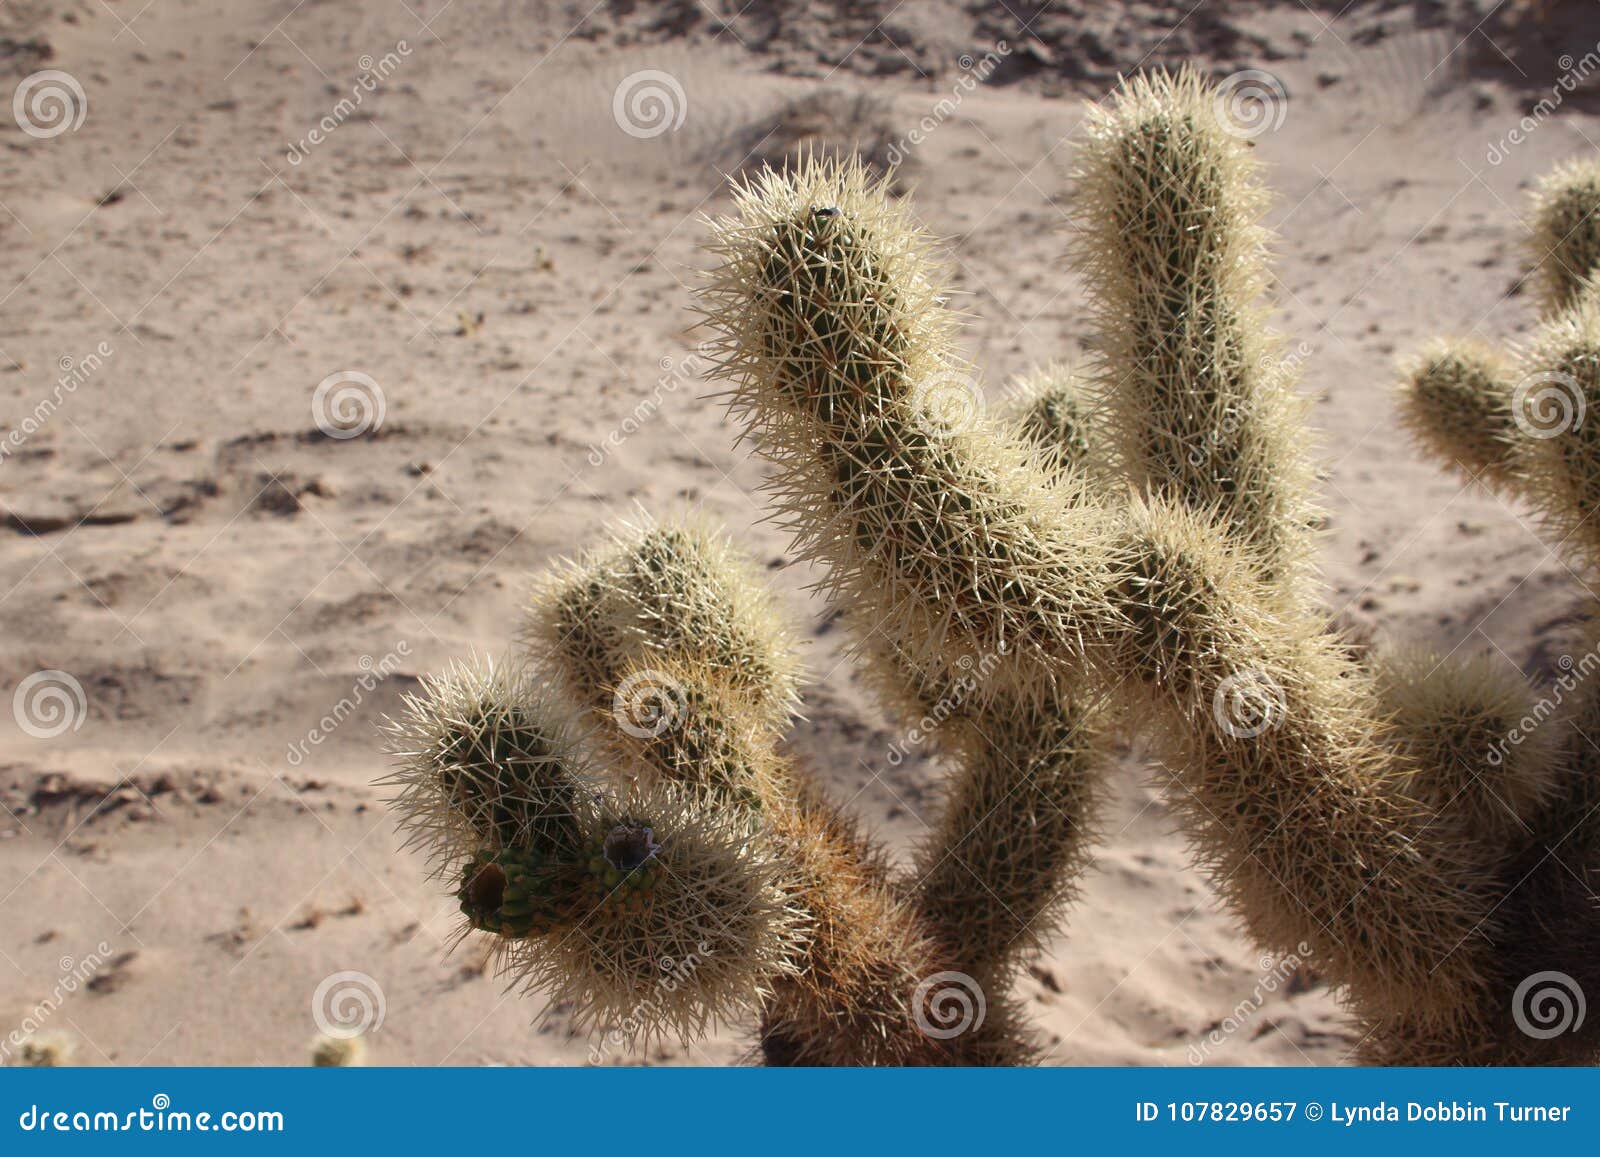 vicious thorns of cholla cactus near el golfo de santa clara, sonora, mexico